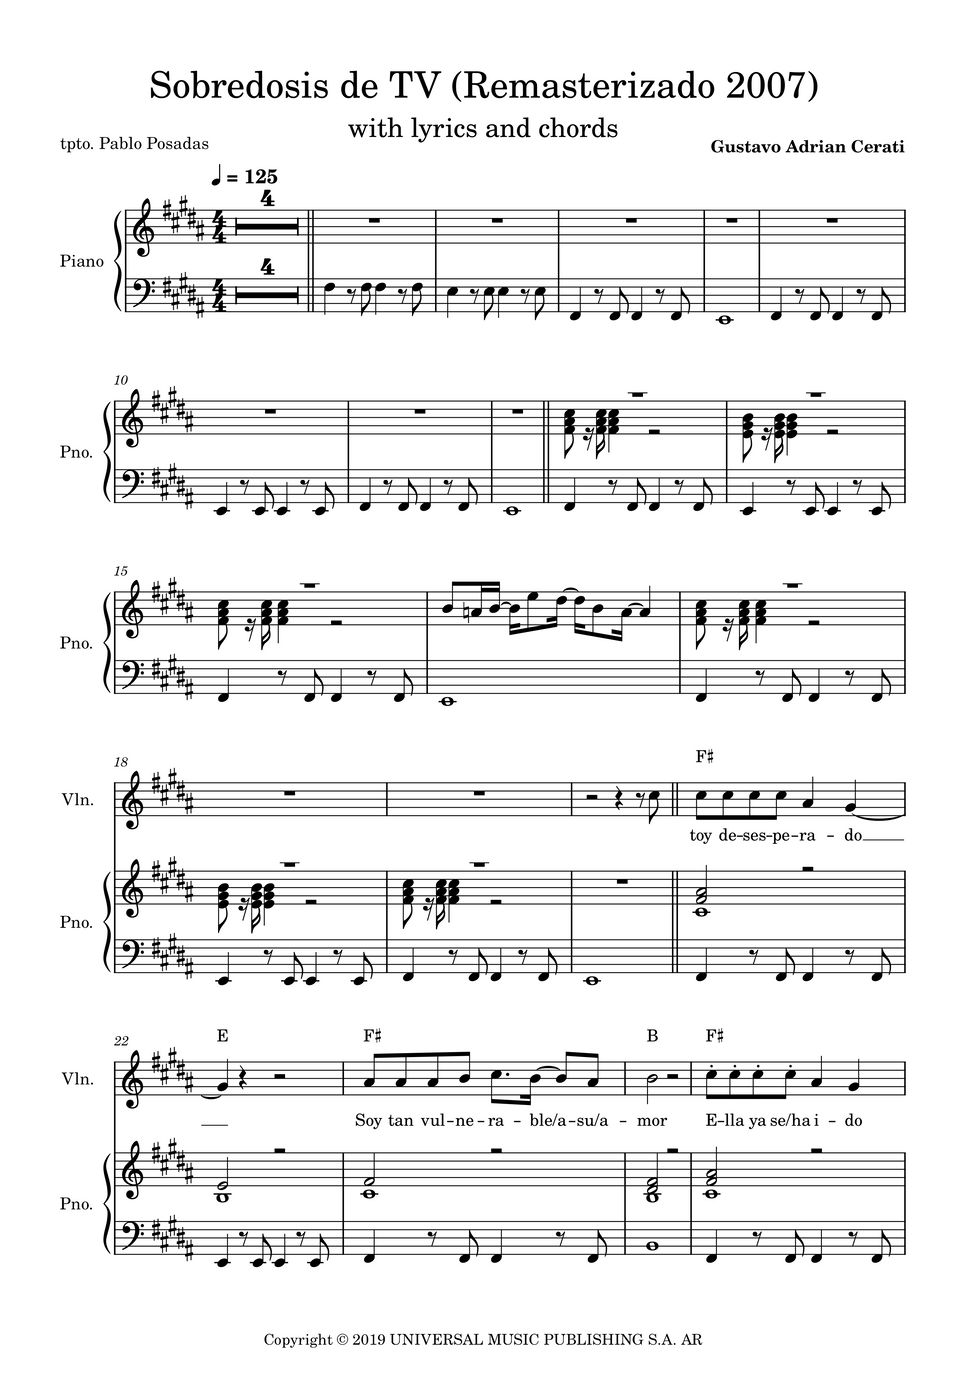 Soda Stereo - Sobredosis de tv (violin/voice and piano arrangement) by Thec P